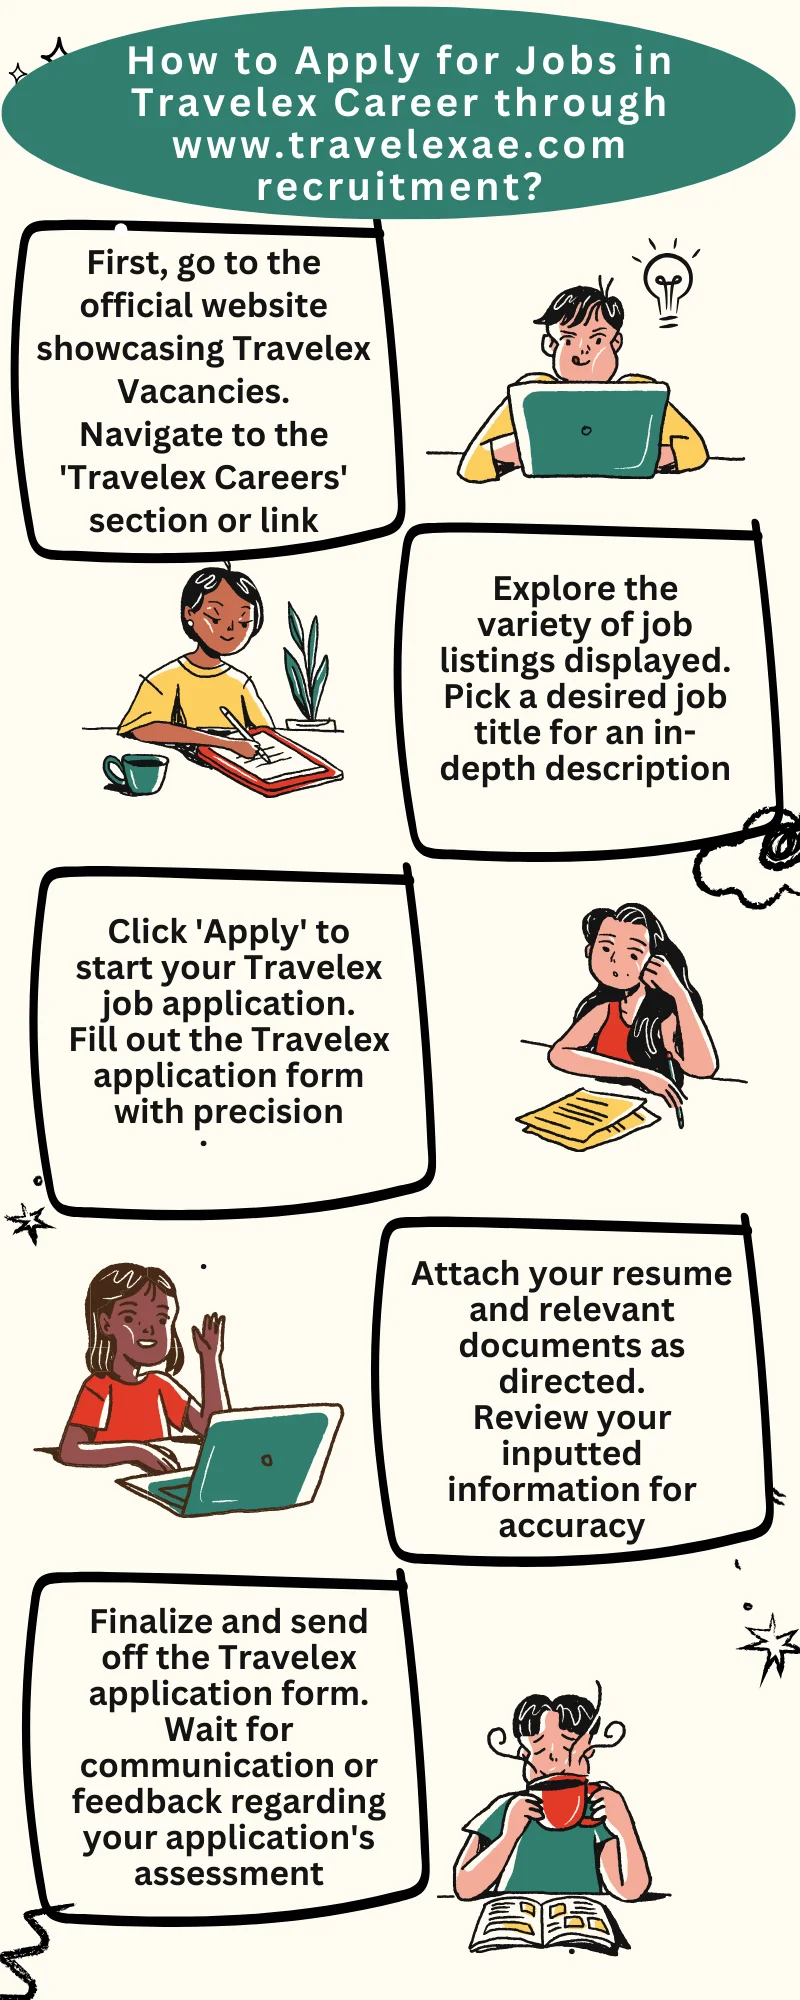 How to Apply for Jobs in Travelex Career through www.travelexae.com recruitment?